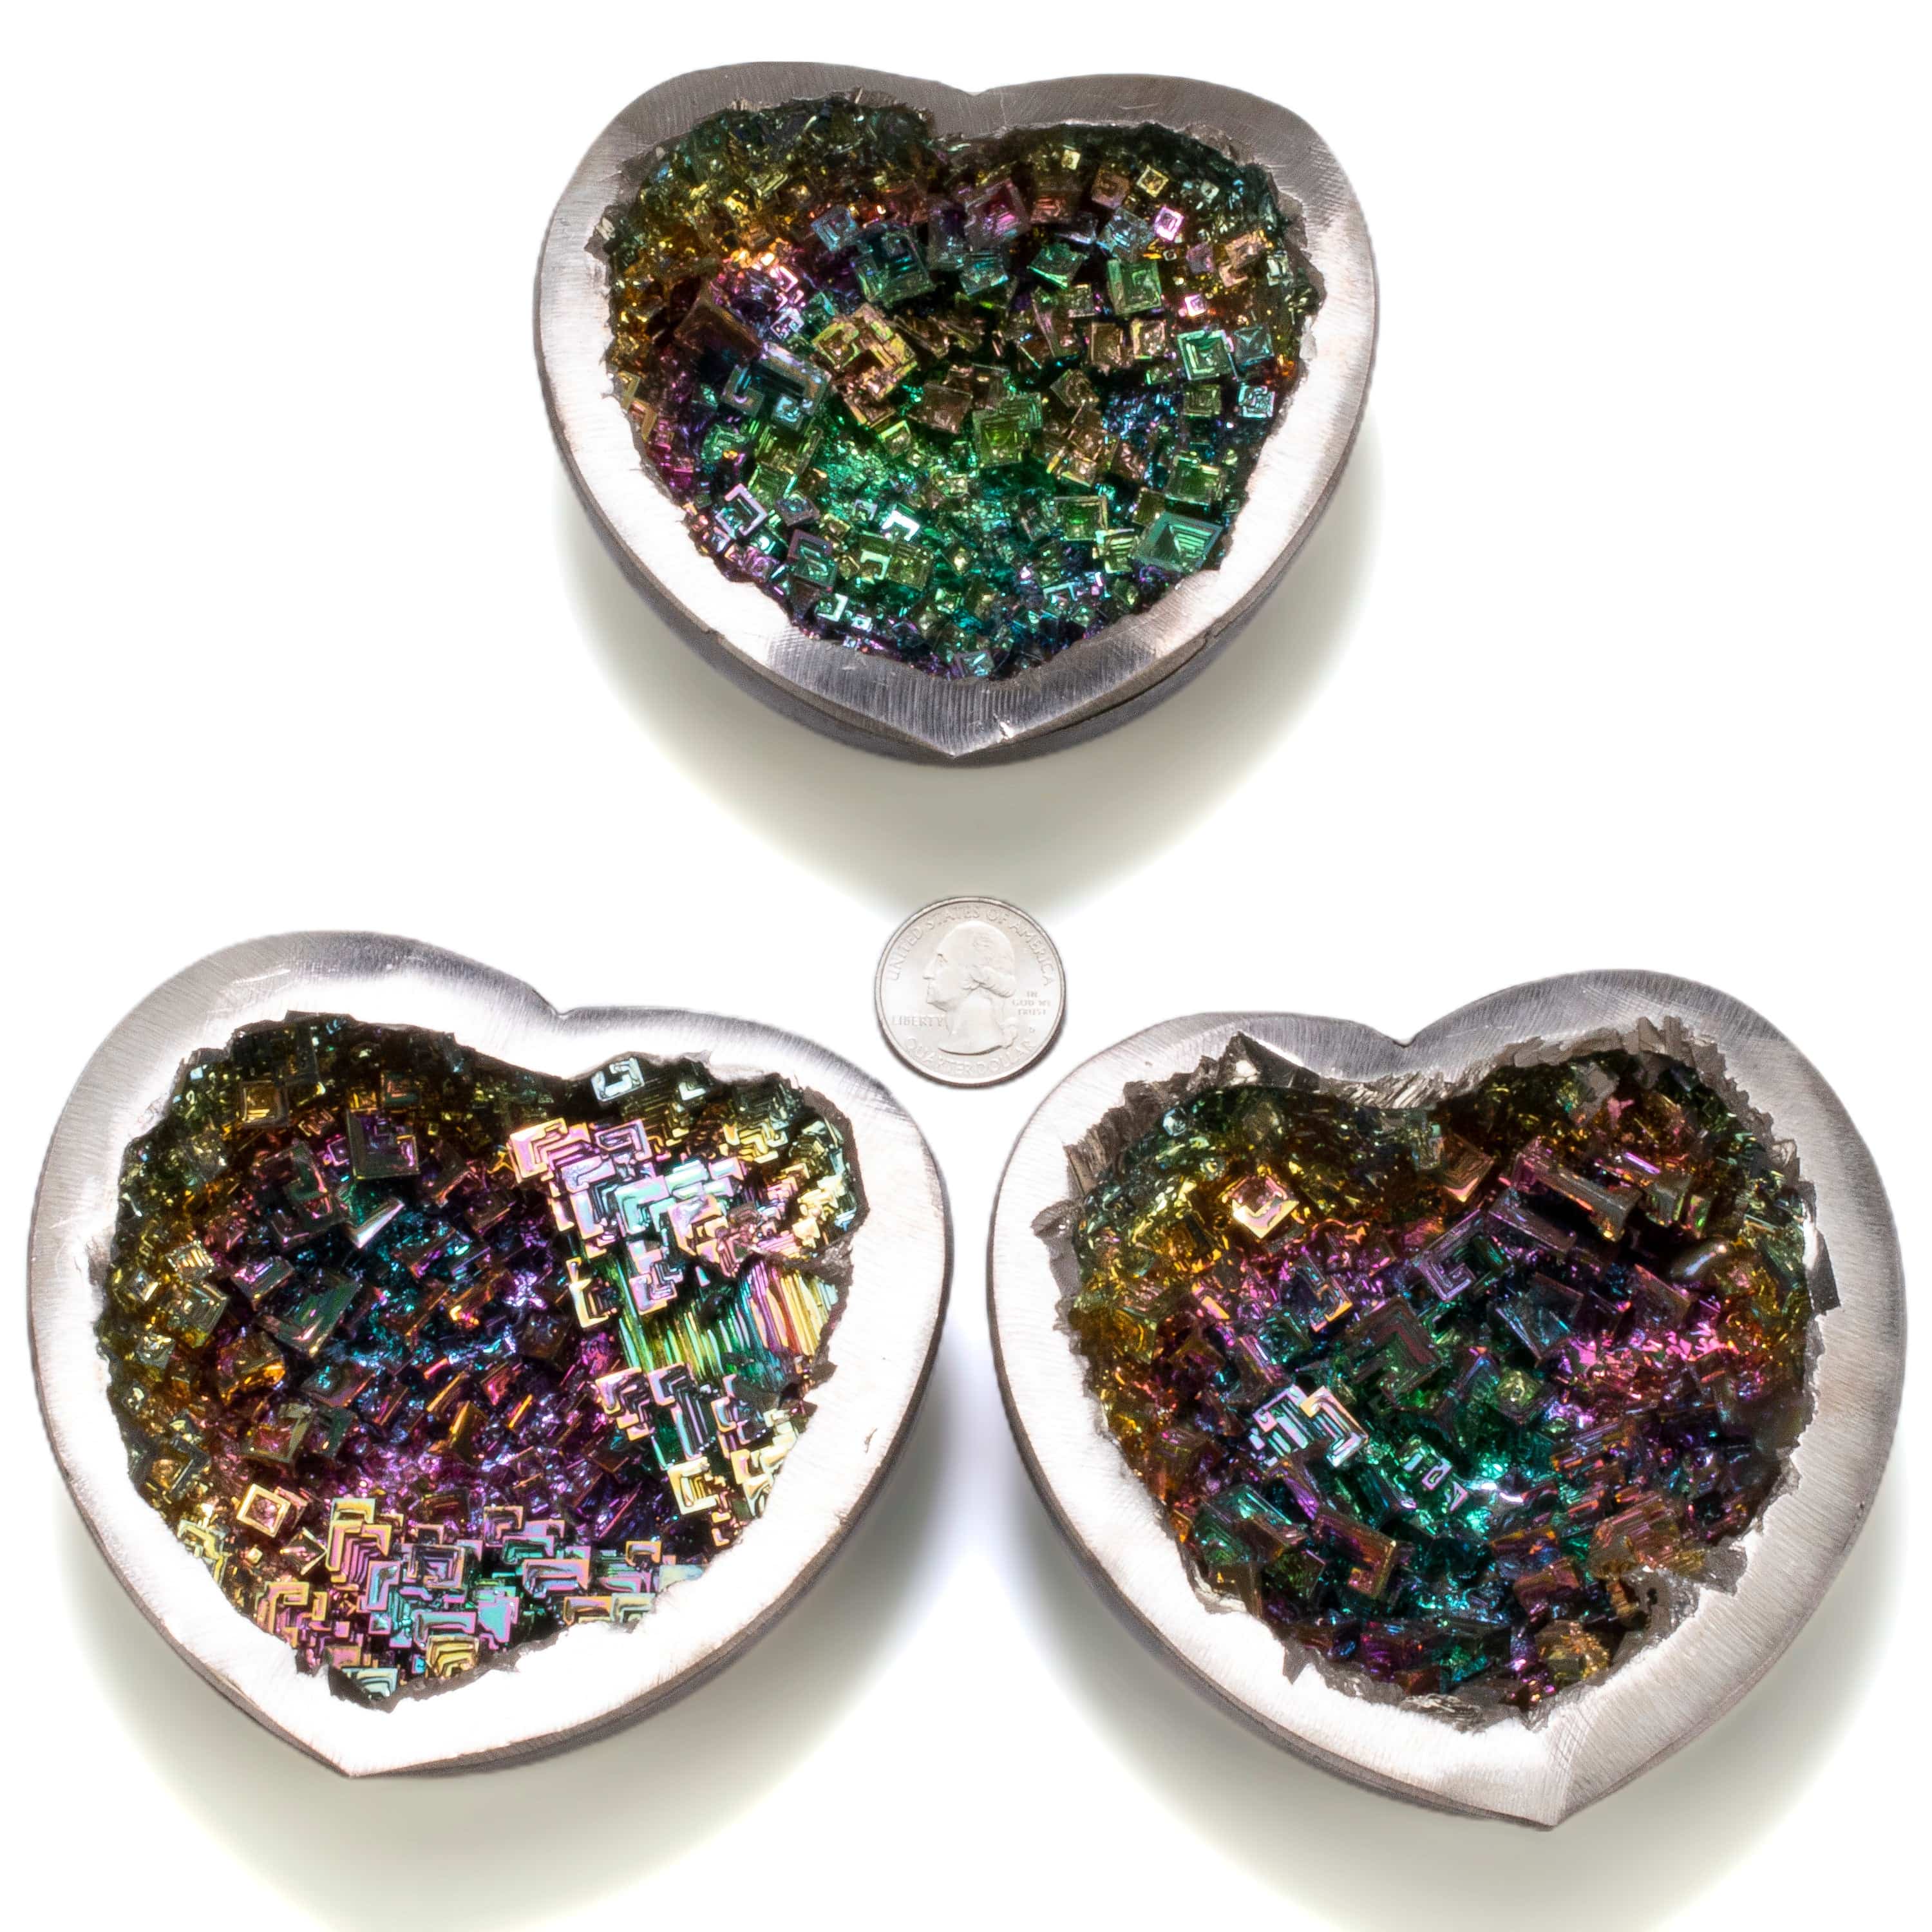 KALIFANO TUMBLED STONES Bismuth Heart - 4.5" BISMUTH-H